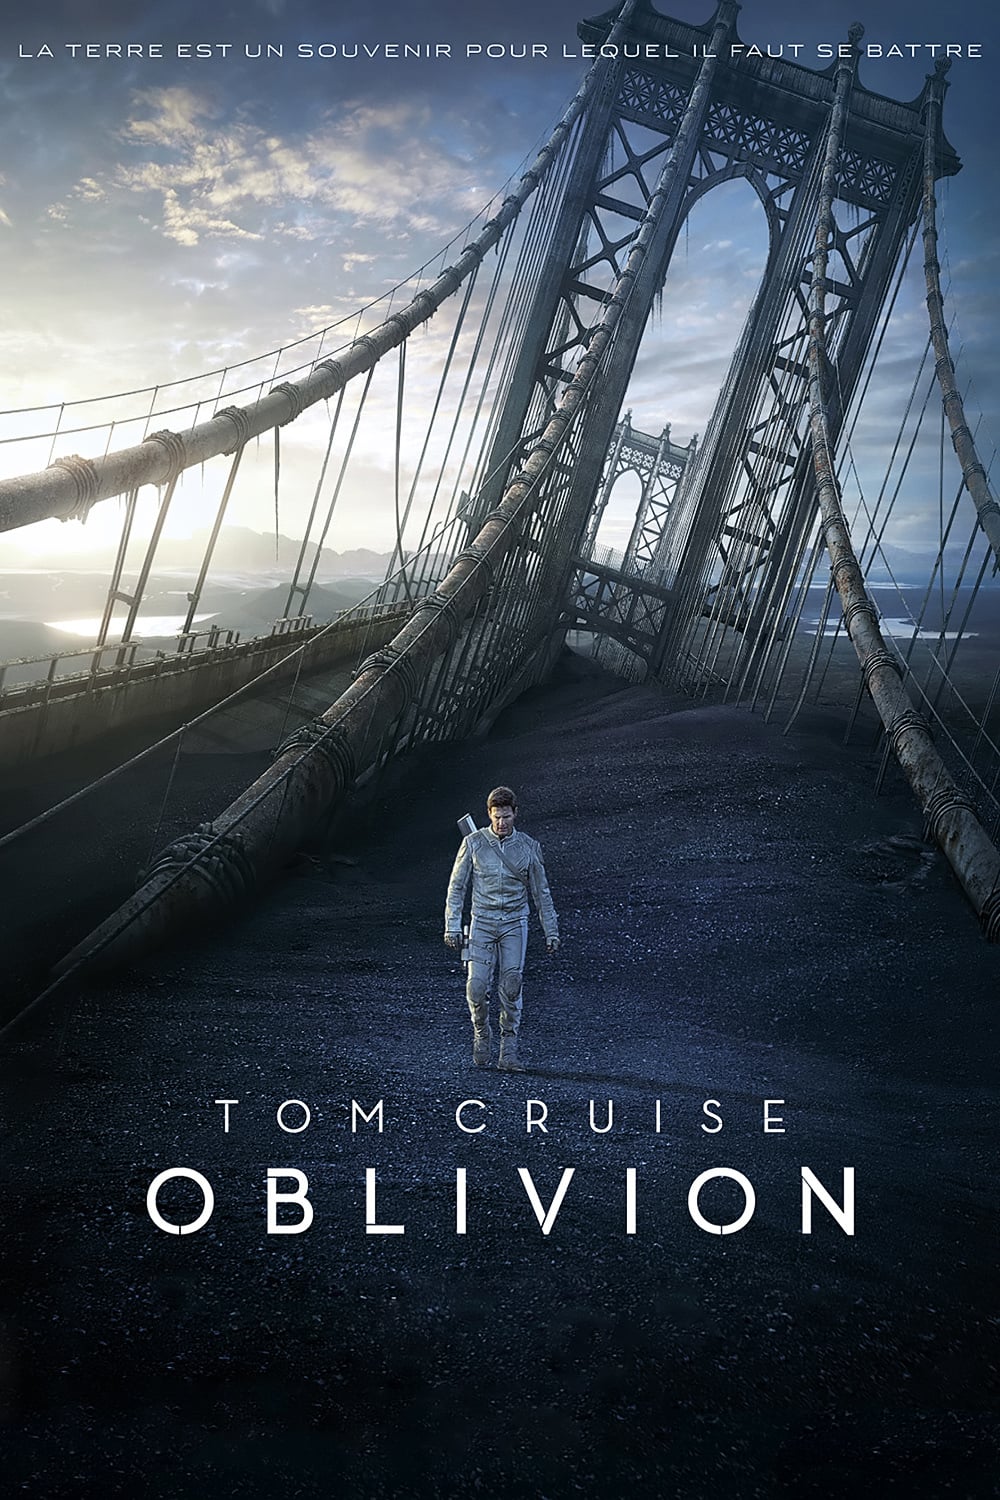 Affiche du film "Oblivion"